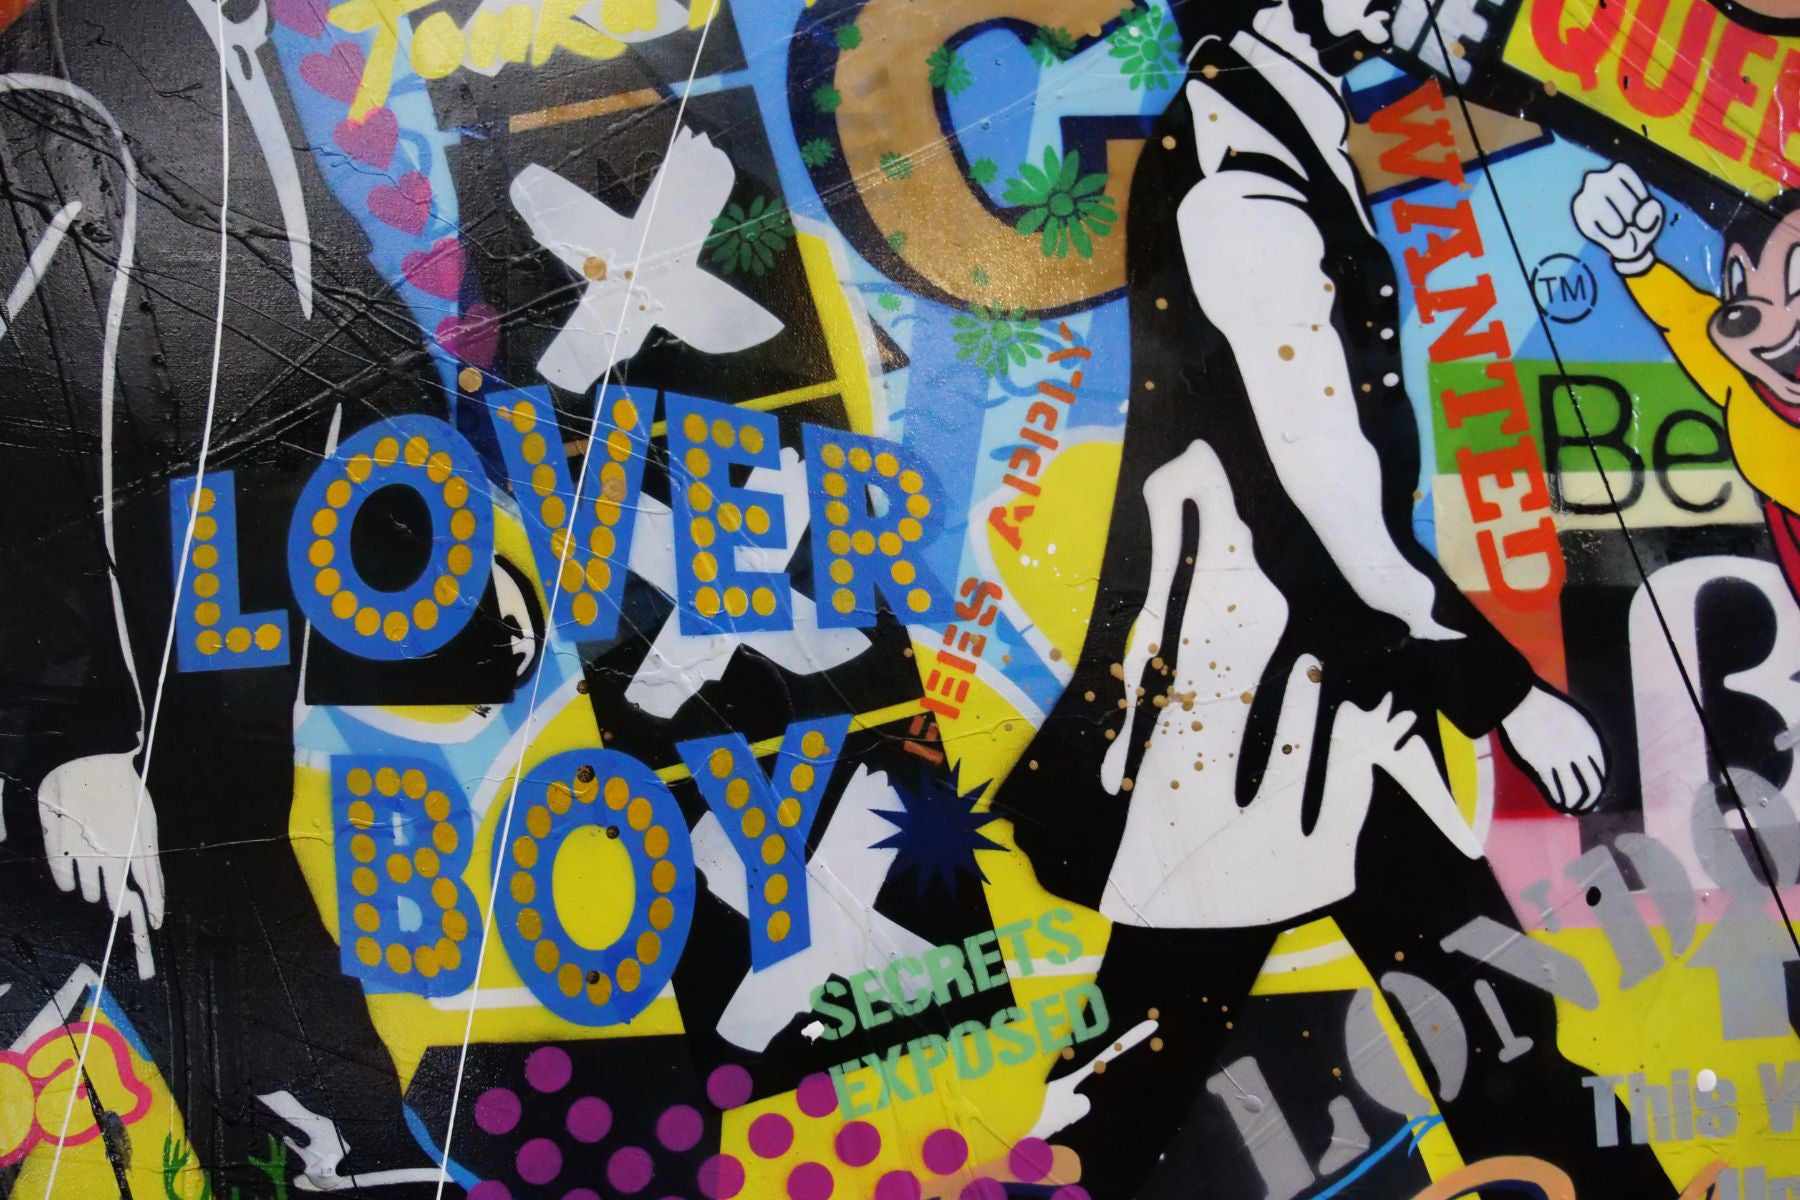 She Loves You Yeah Yeah Yeah 240cm x 120cm The Beatles Textured Urban Pop Art Painting